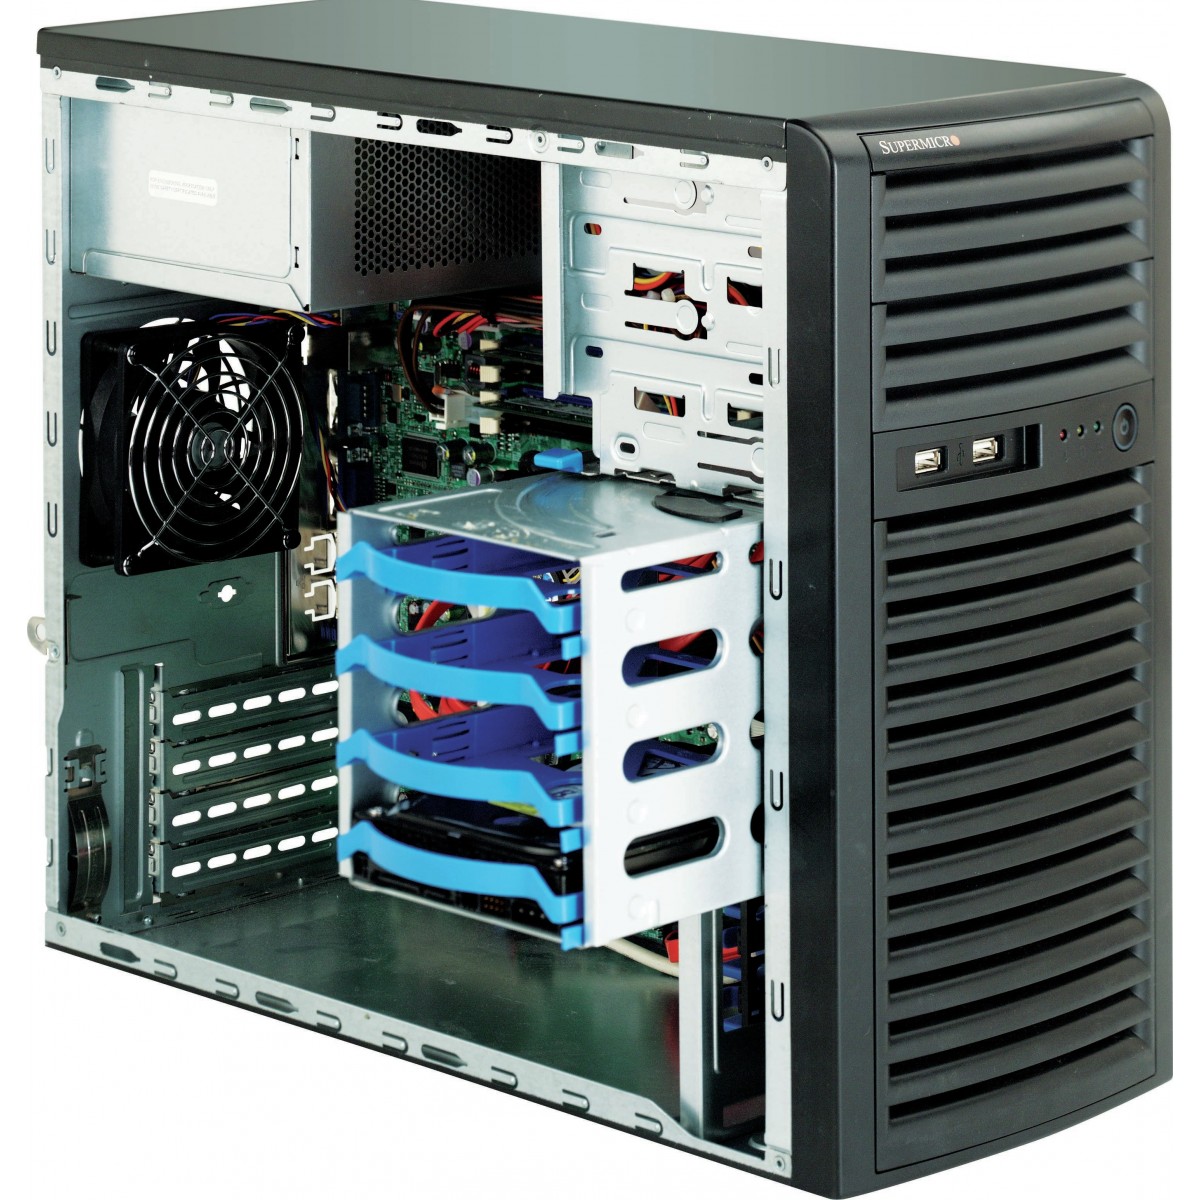 Supermicro 731i-300B Mini-Tower Black Server Case with 300W 80PLUS Bronze Power Supply - Mini Tower - Server - Metal - Black - M